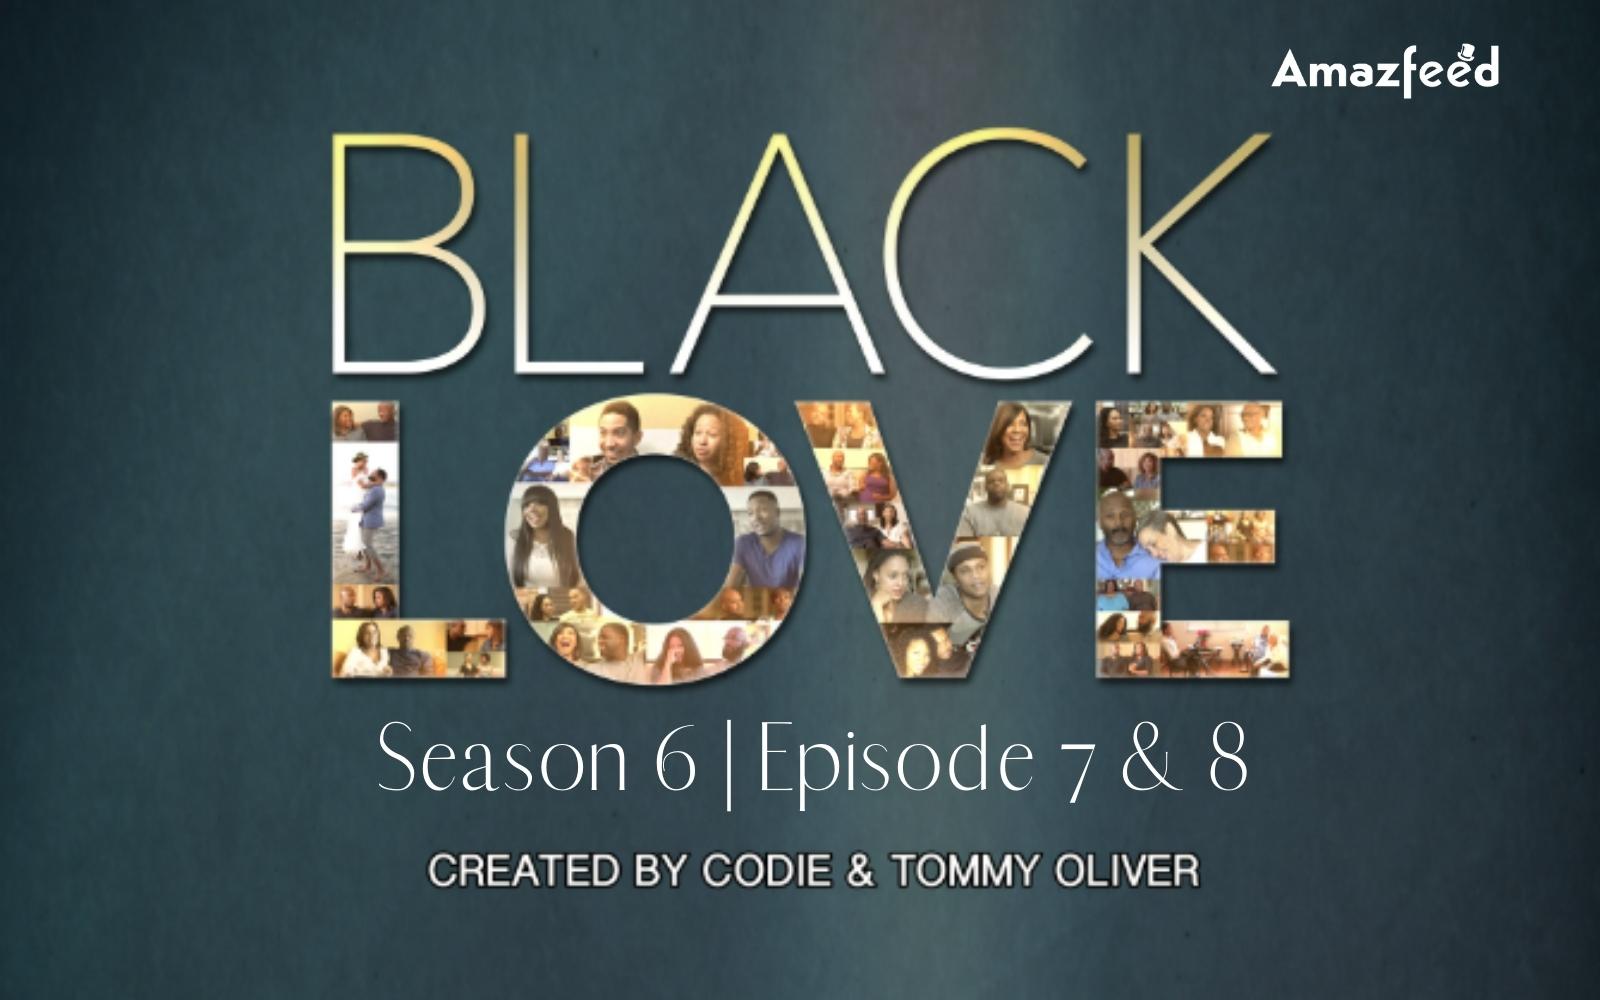 Black Love Season 6 Episode 7 & 8 ⇒ Countdown, Release Date, Spoilers, Recap, Cast & News Updates